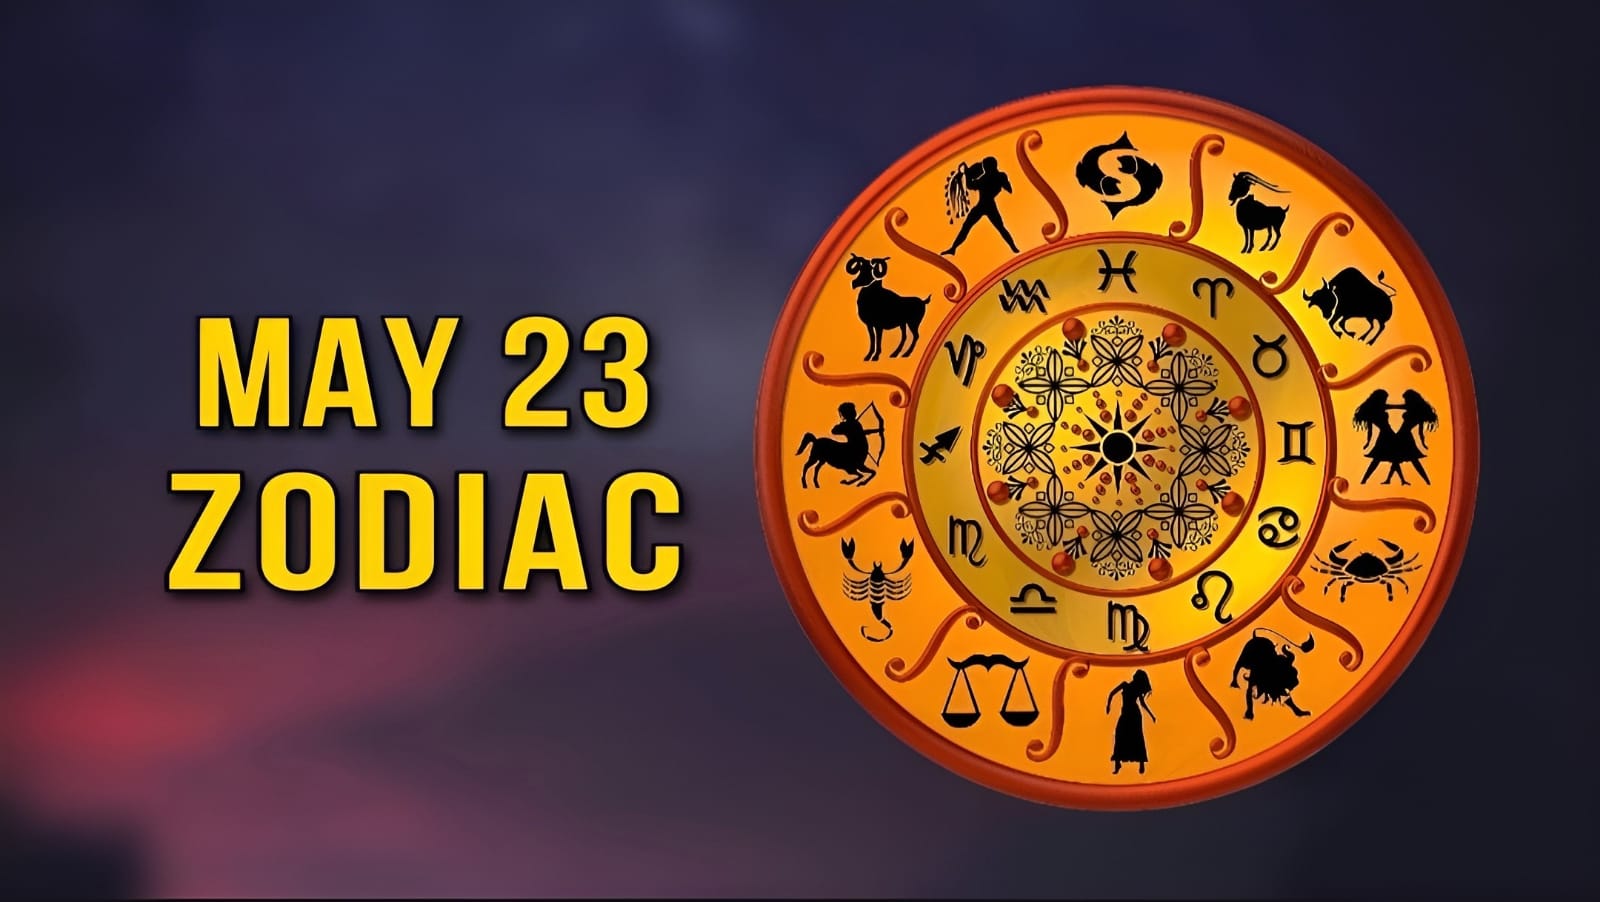 May 23 Zodiac